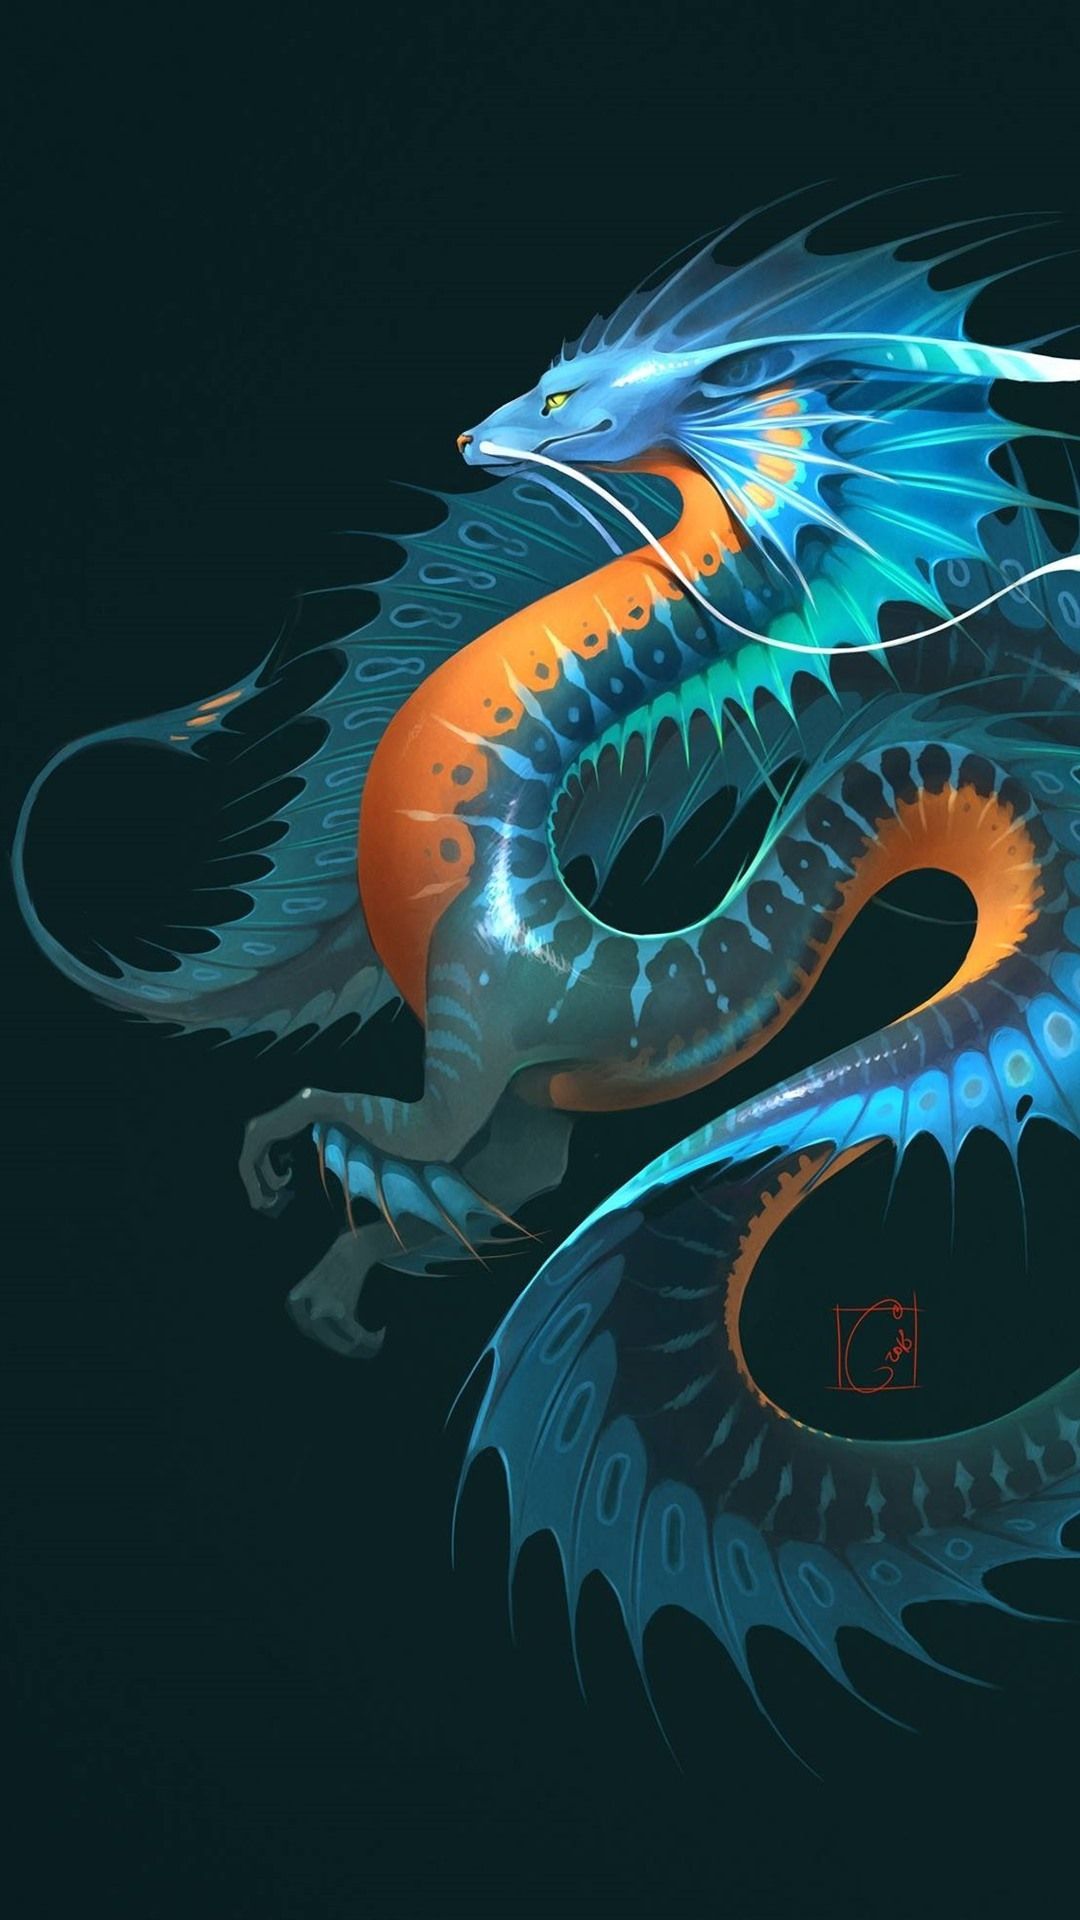 Dragon Background. Wallpaper iphone neon, Dragon image, iPhone art